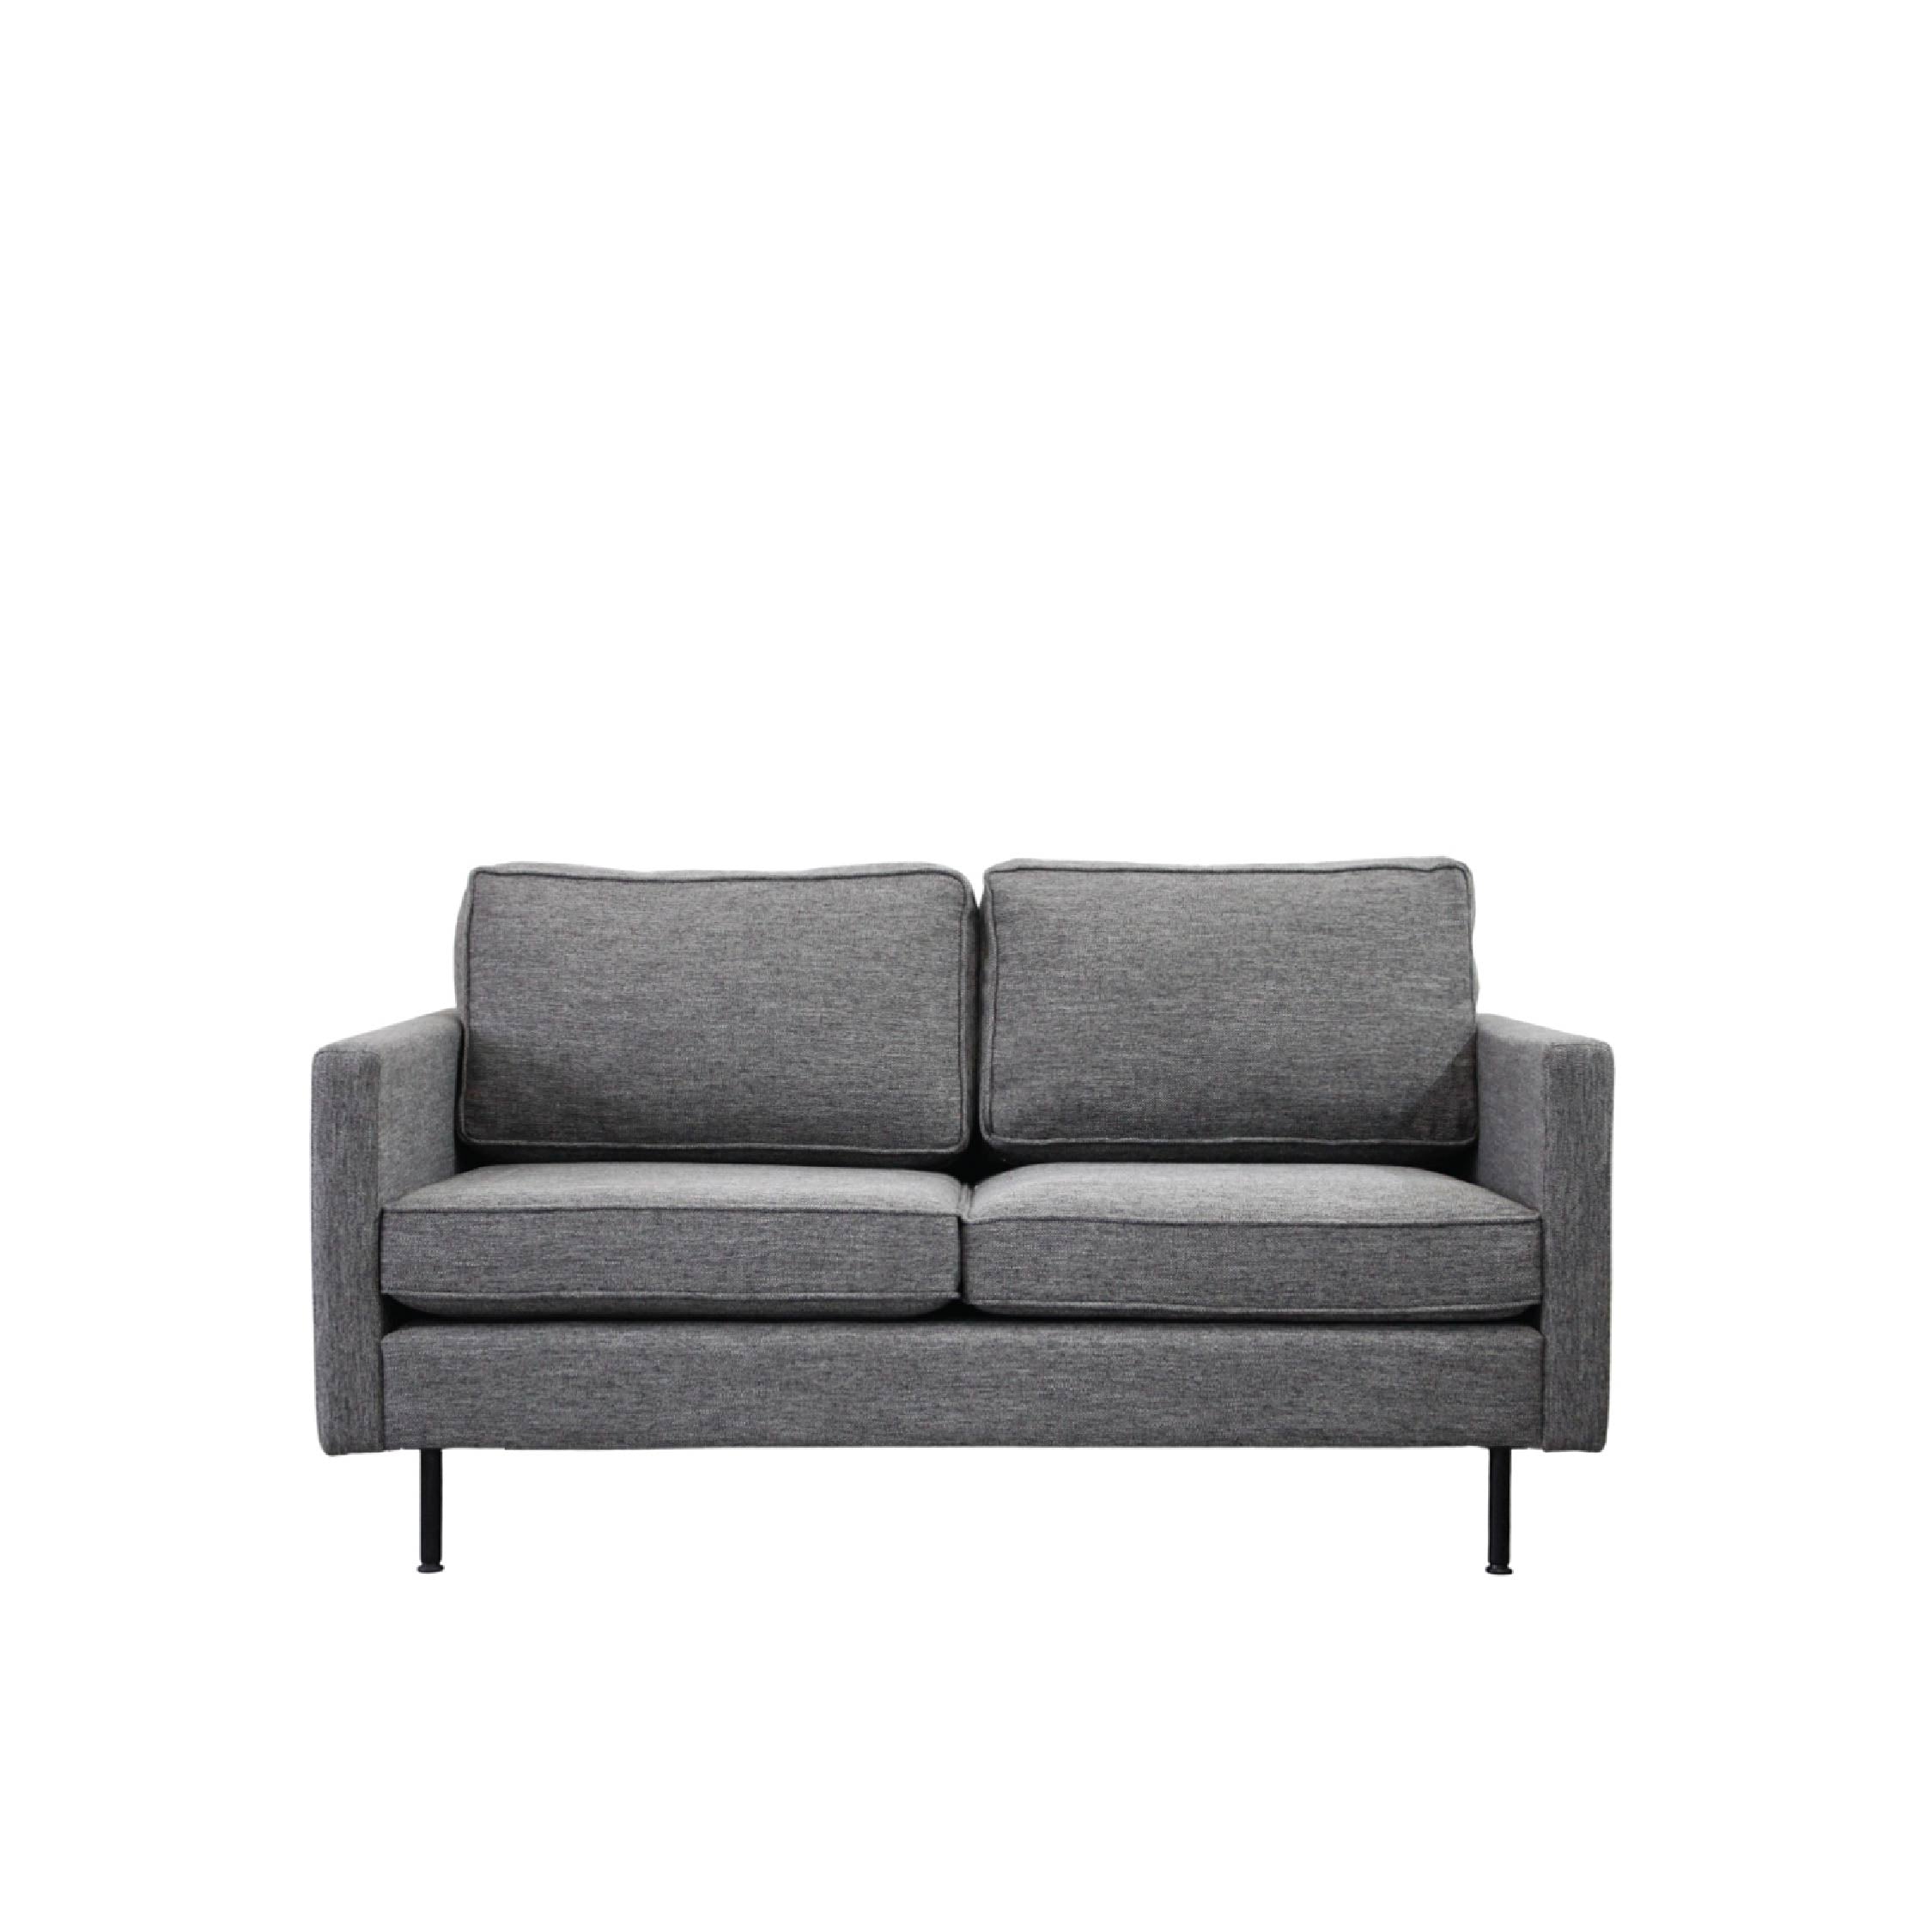 GARIS Sofa 2 Seater in Charcoal Fabric Exhibit Sales at Seremban 2 Offline Store